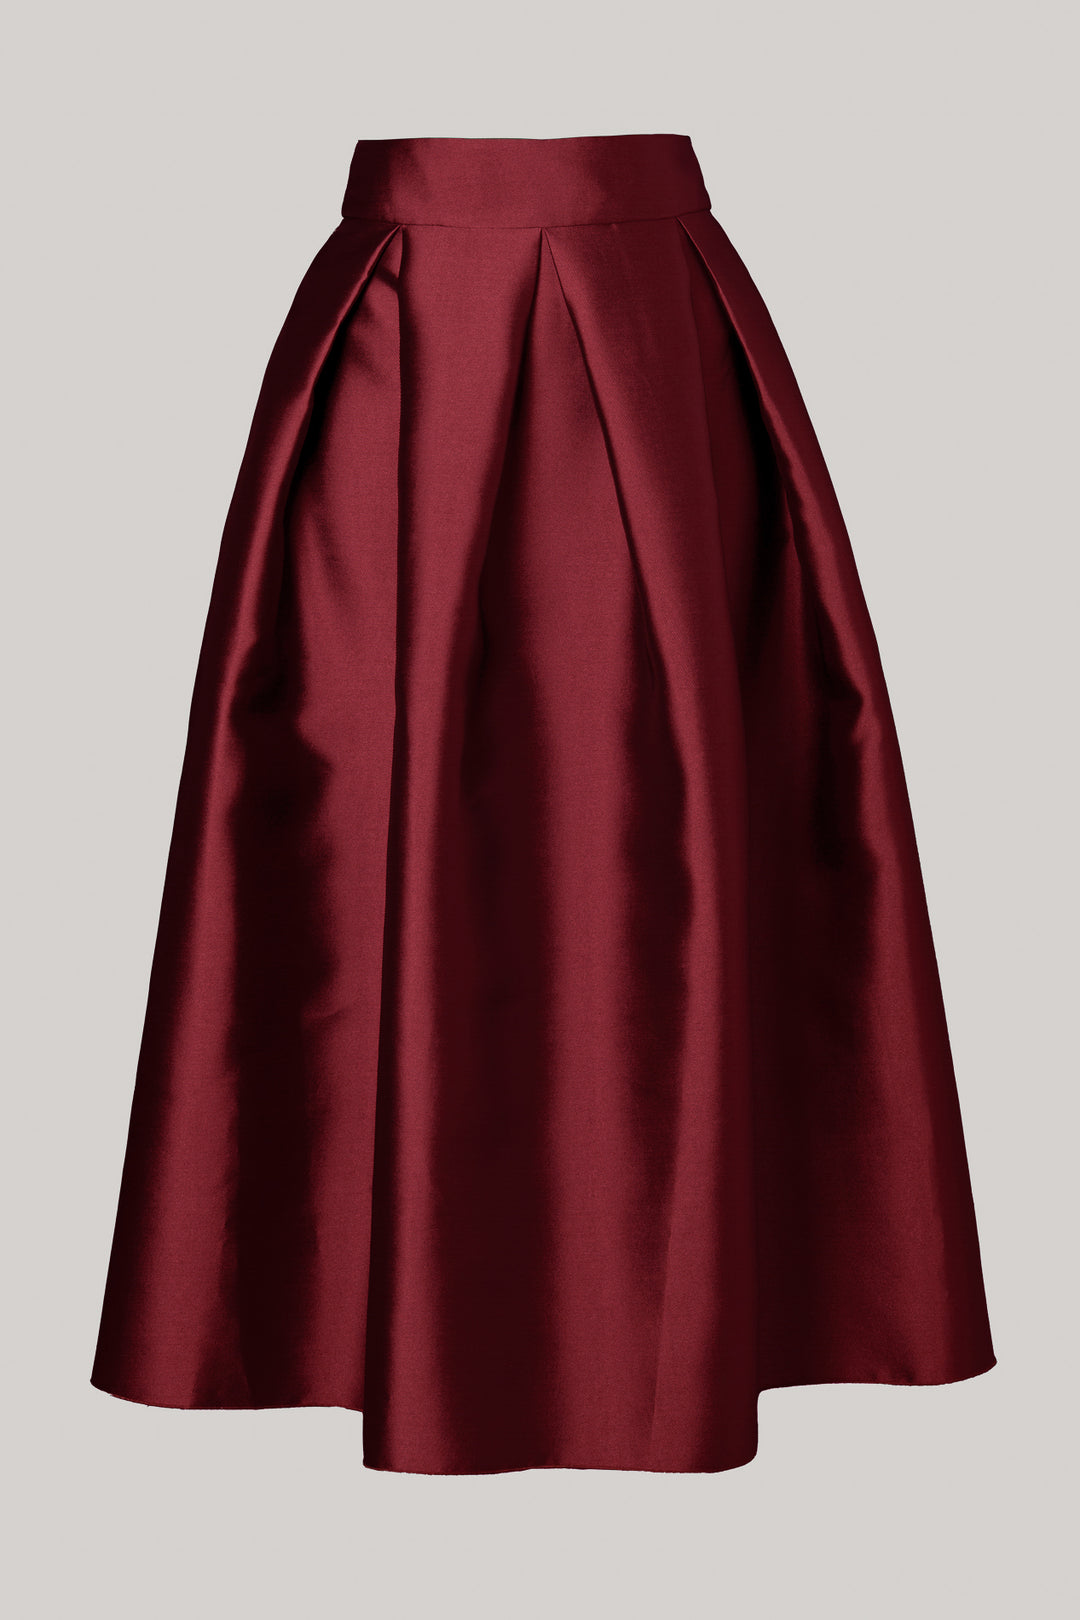 Jasmine Structured Burgundy Mikado Skirt